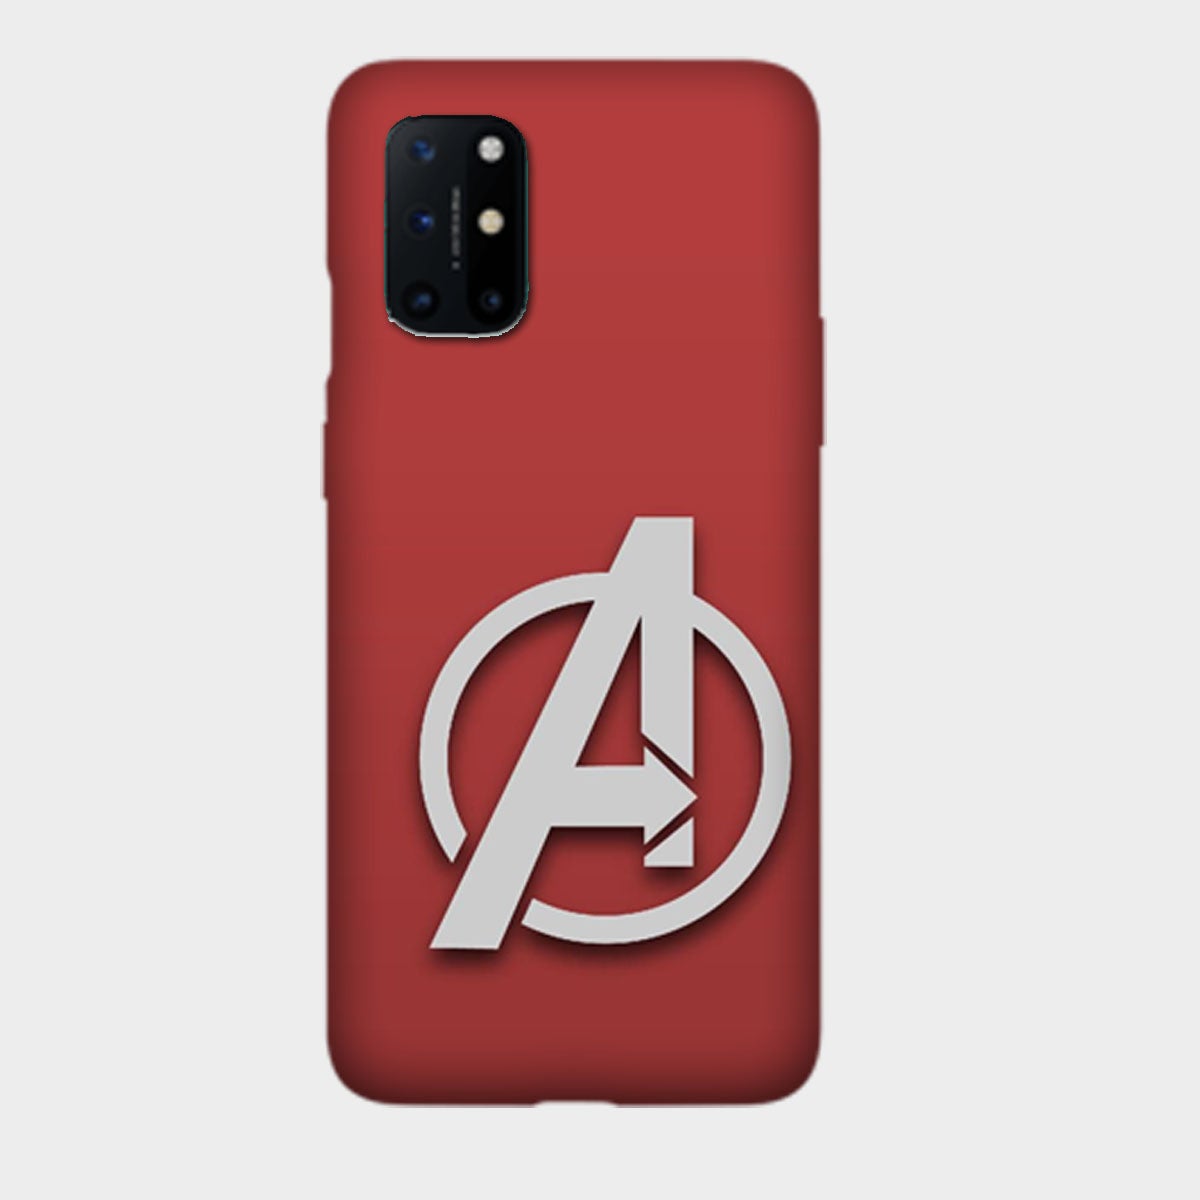 Avenger - Red - Mobile Phone Cover - Hard Case - OnePlus